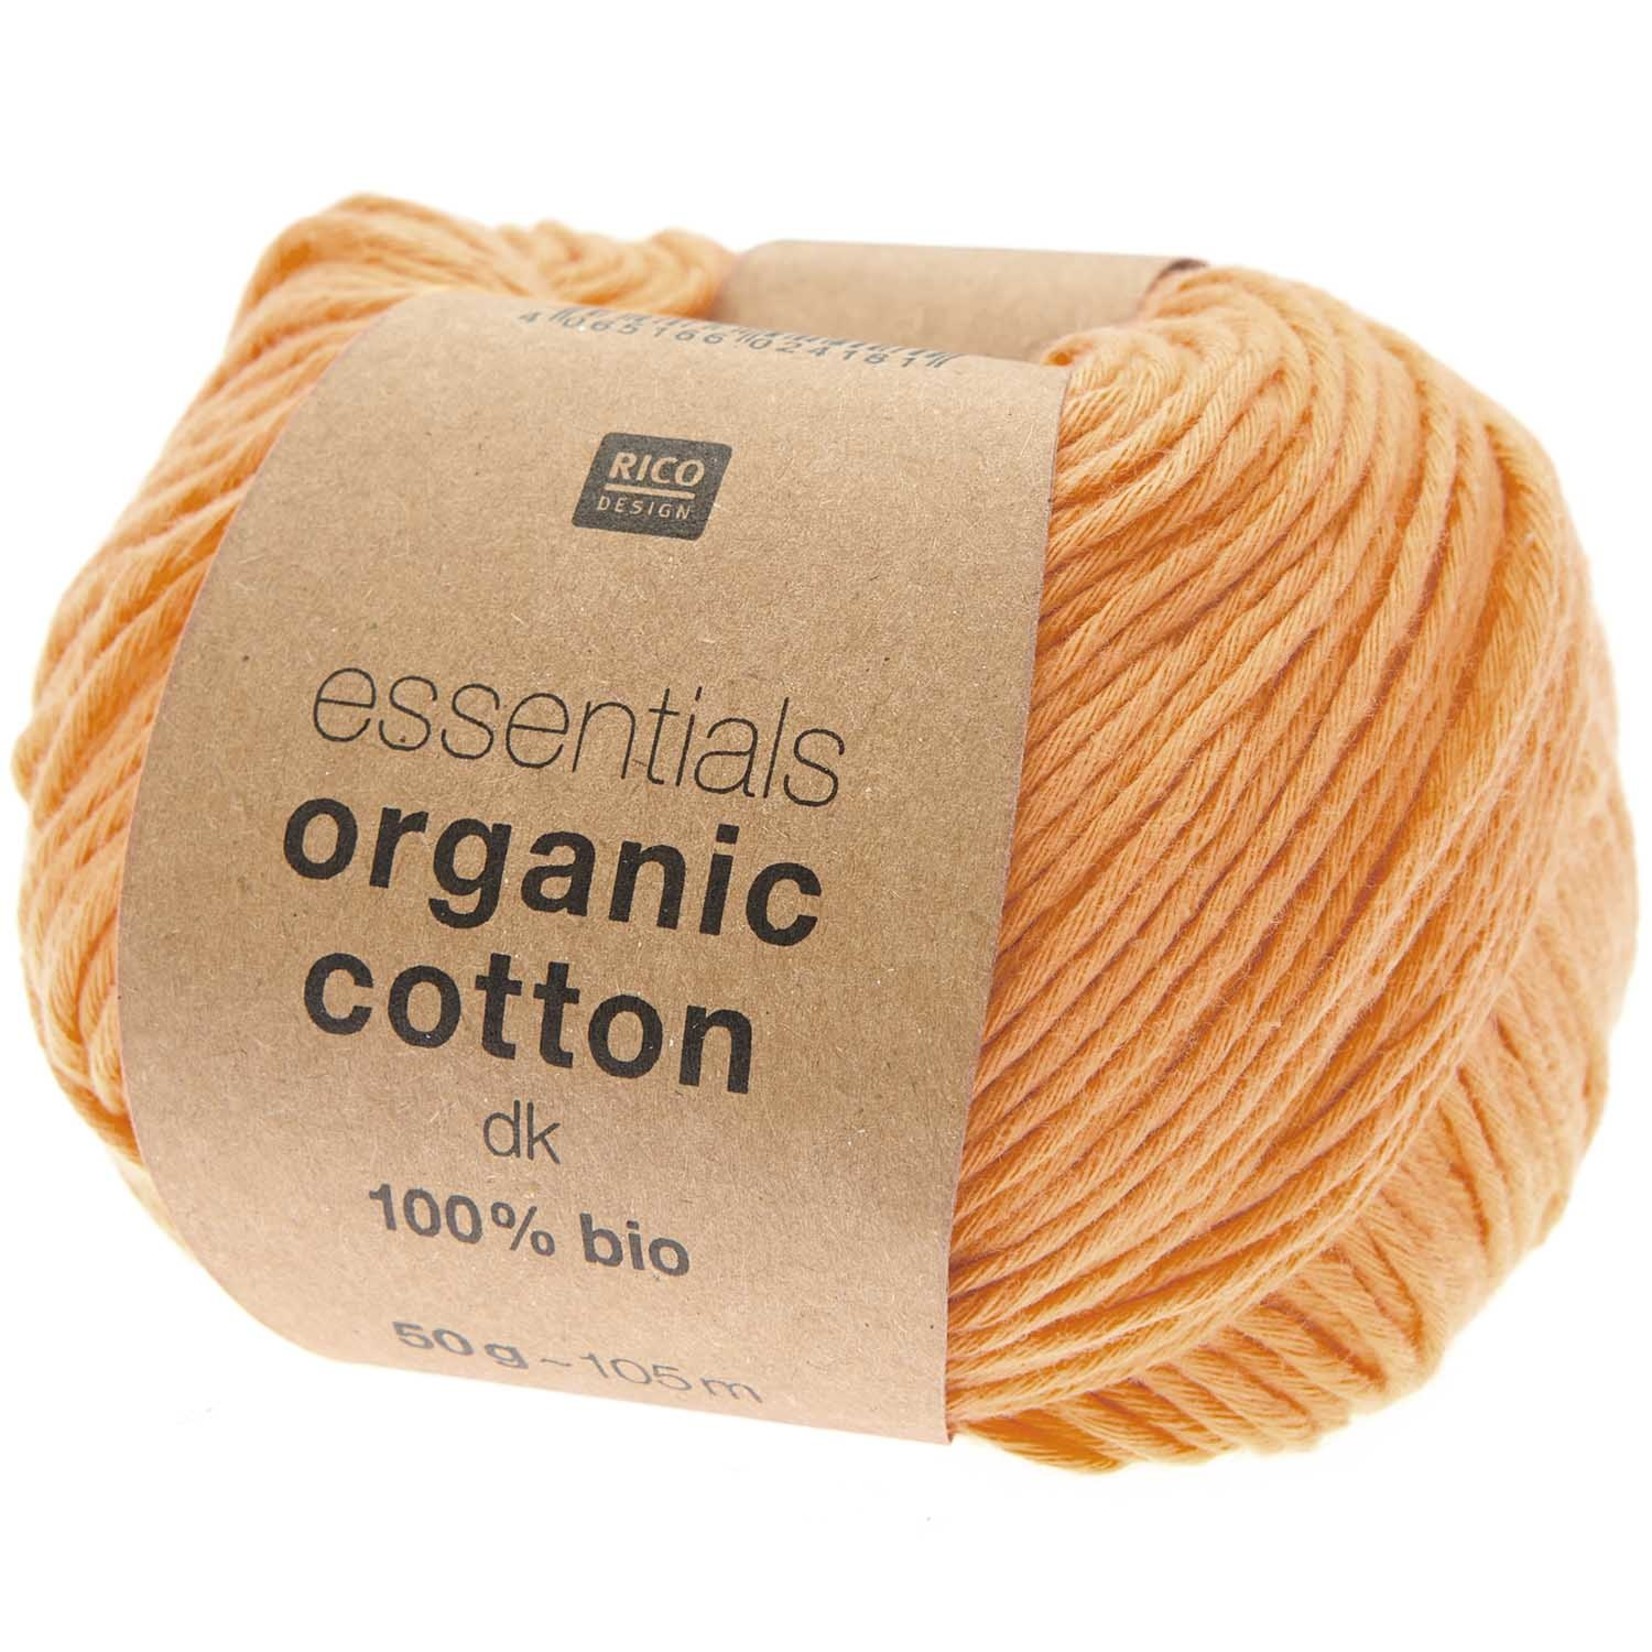 Rico Organic Cotton dk 21 Orange